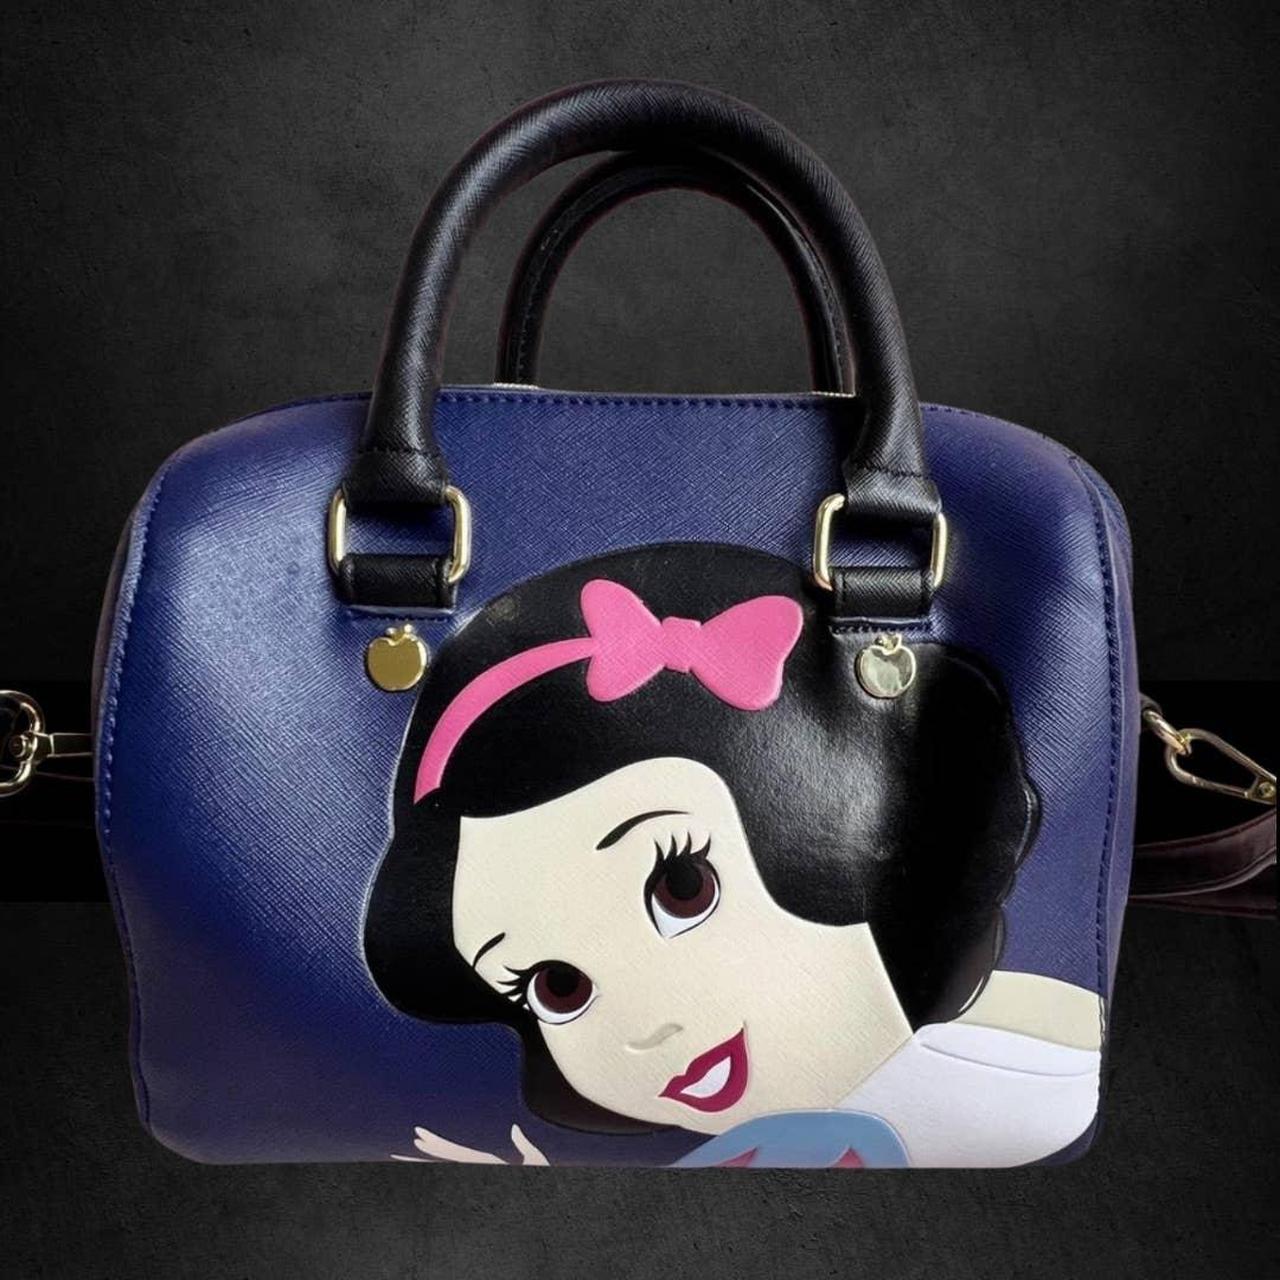 Disney Trading Pins 128259 DLR/WDW - Handbag Mystery Pack - Snow White